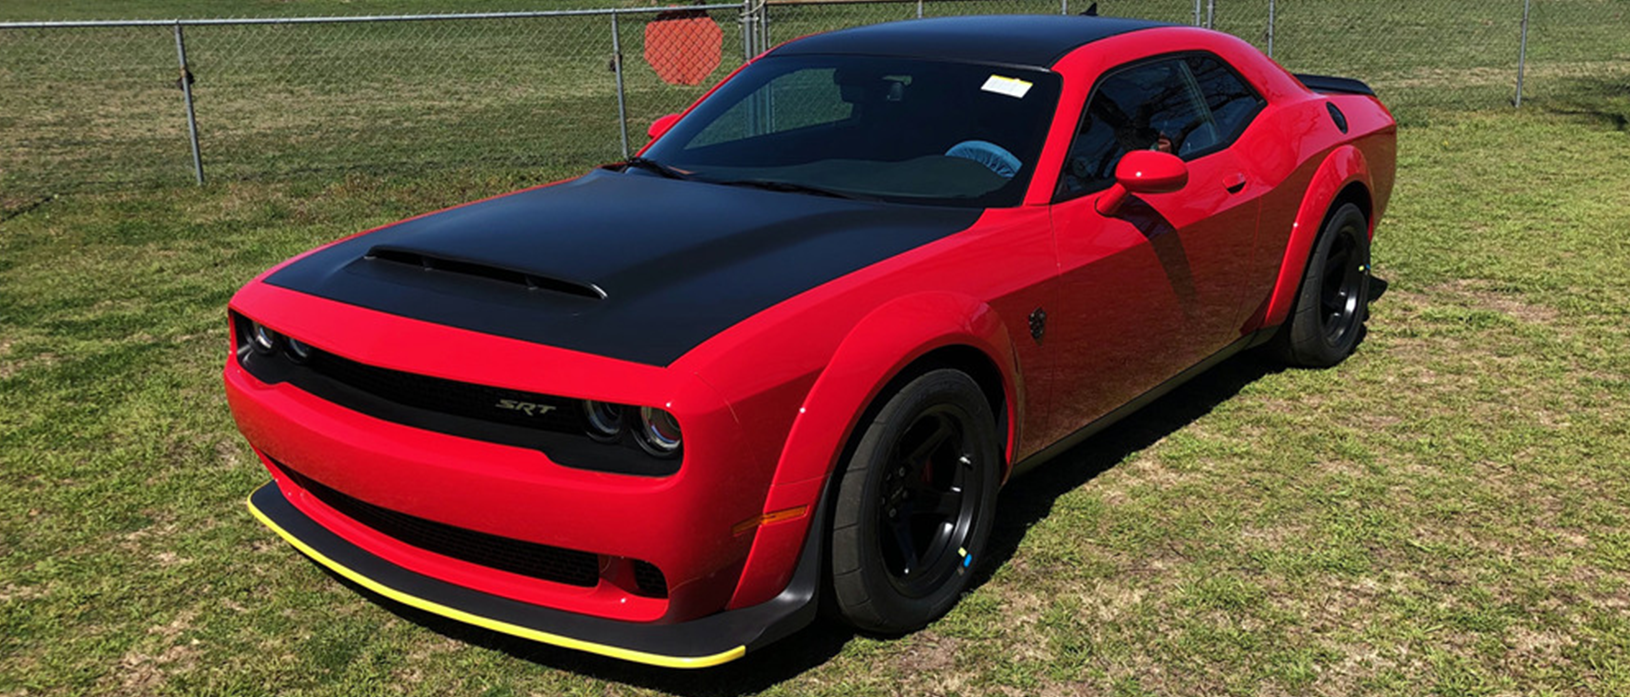 Red 2018 Dodge Challenger SRT Demon